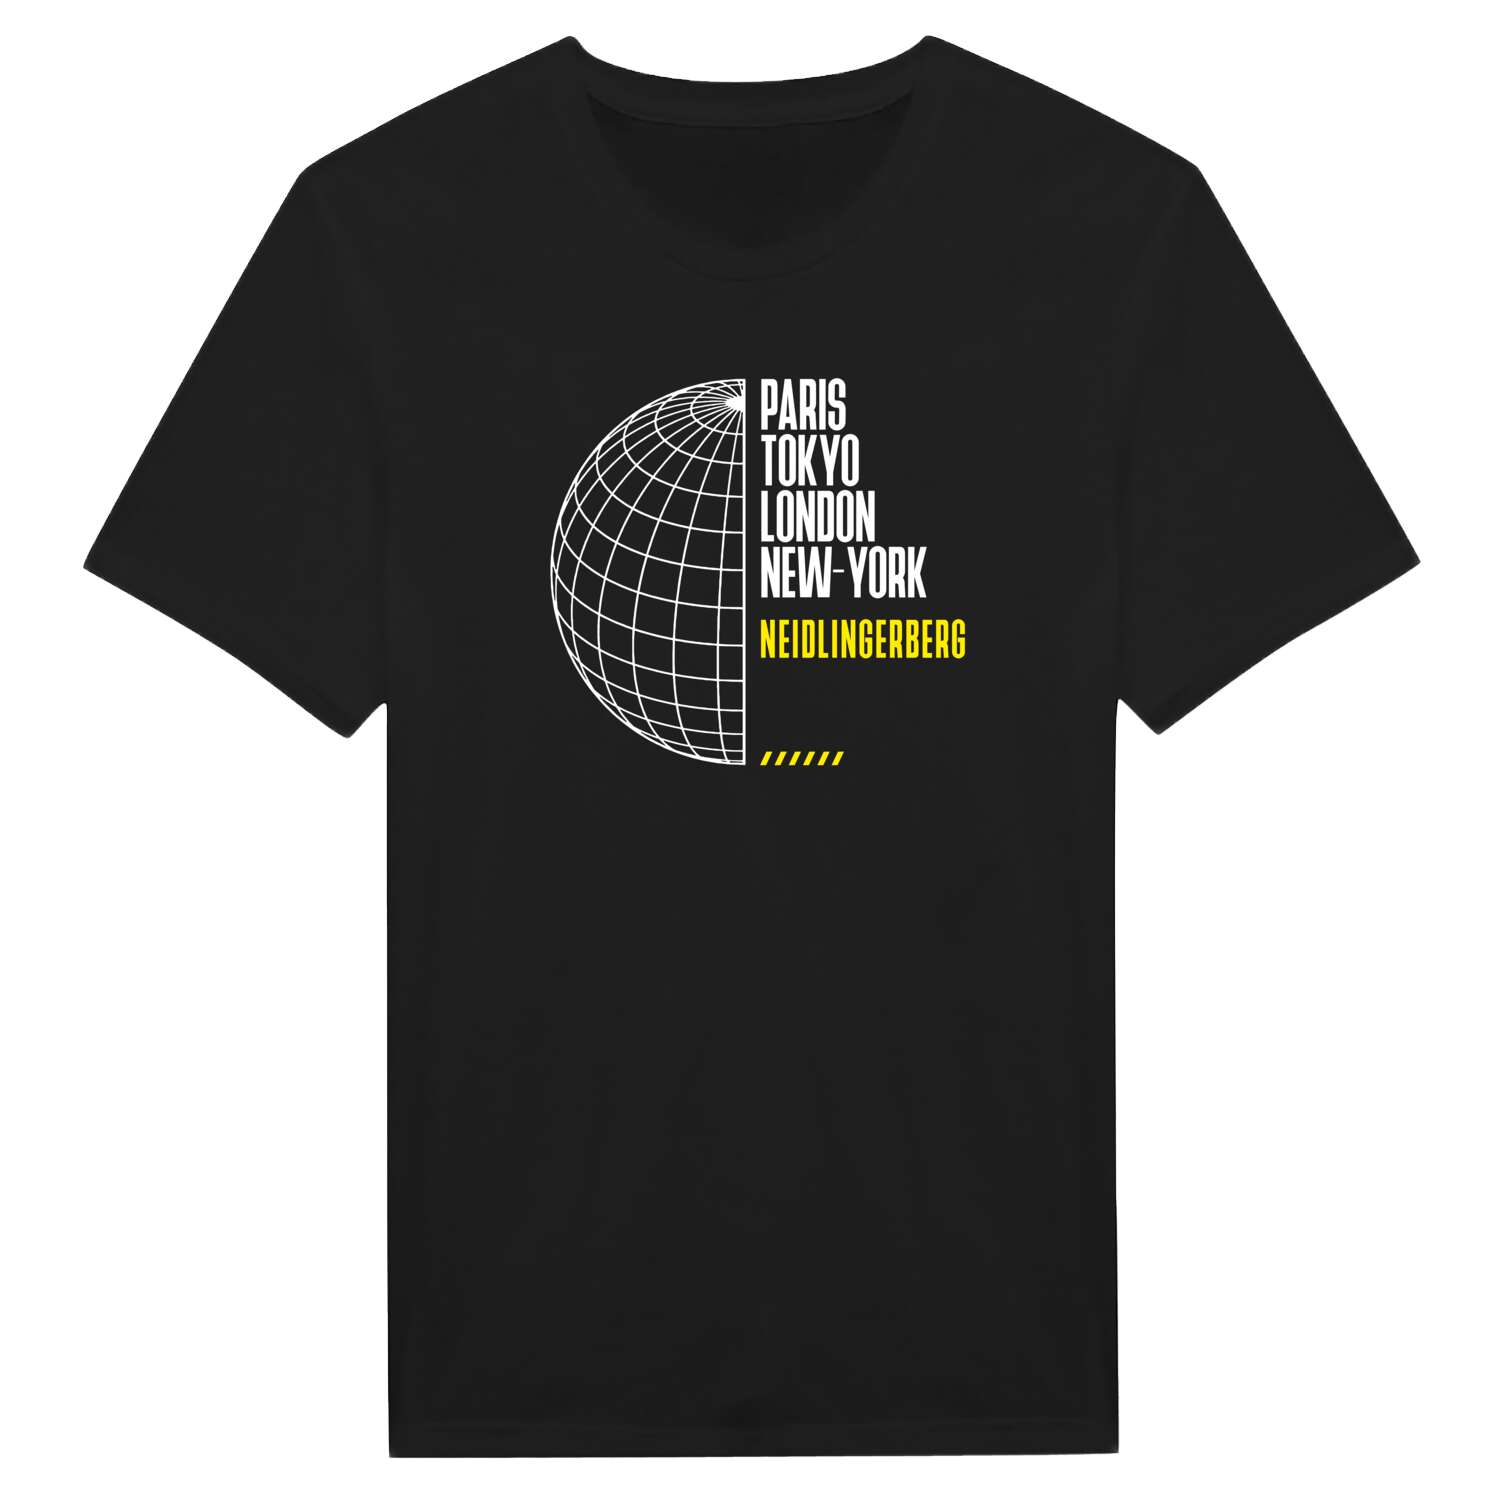 Neidlingerberg T-Shirt »Paris Tokyo London«